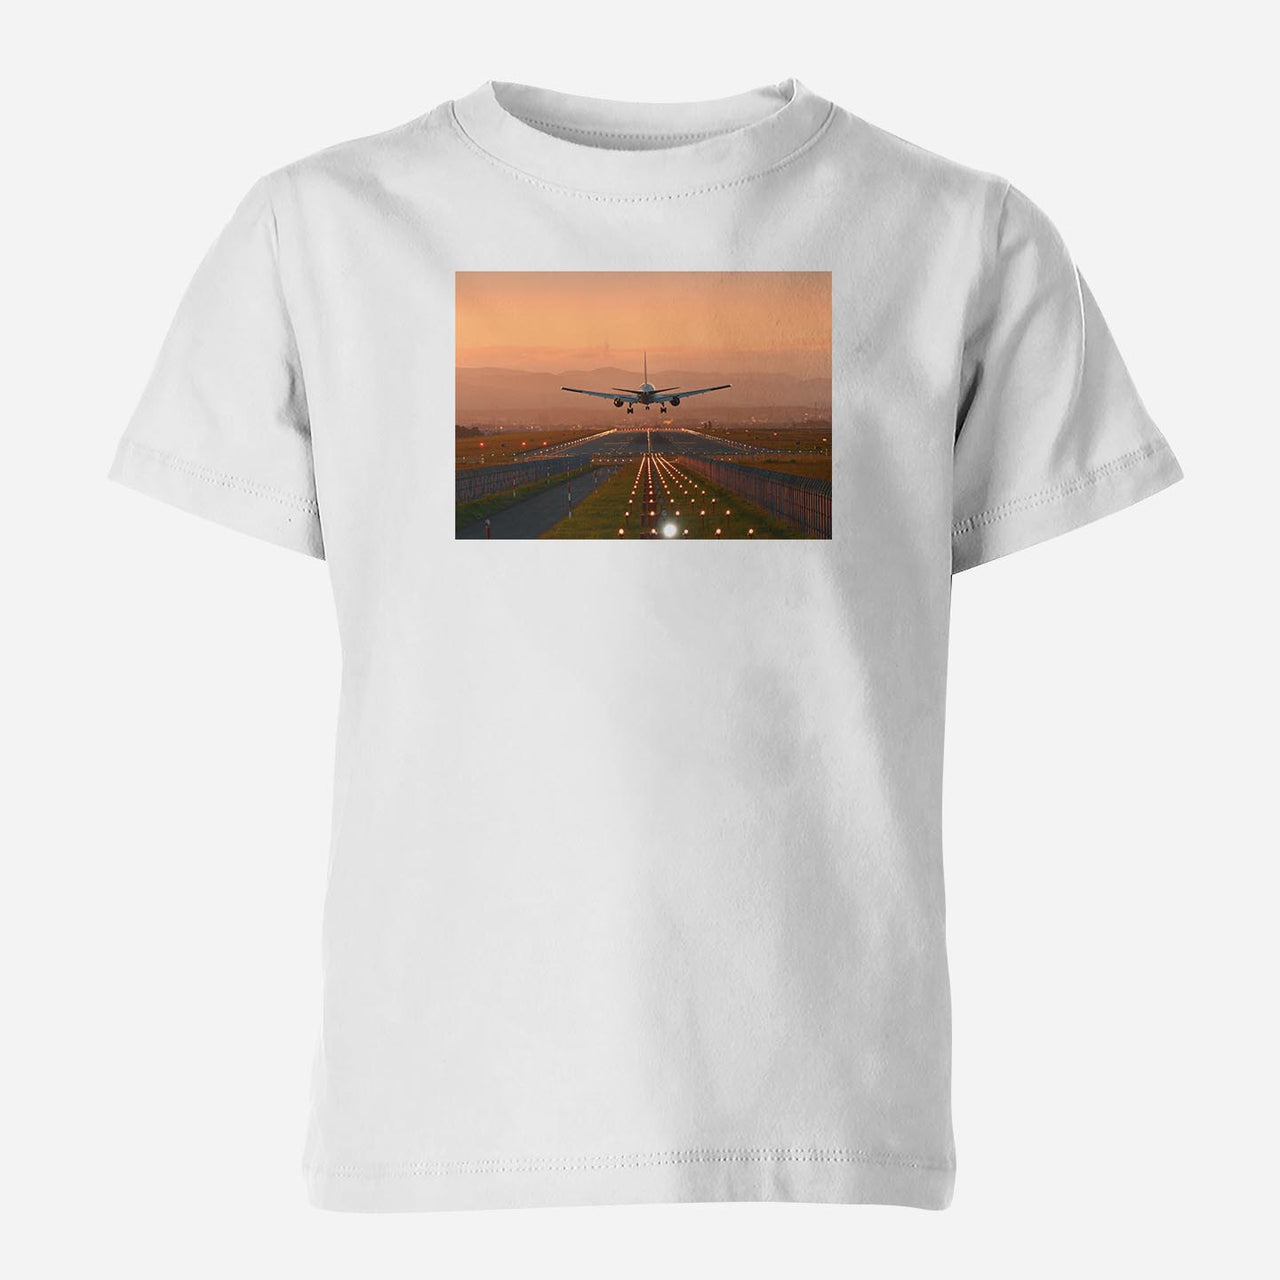 Super Cool Landing During Sunset Designed Children T-Shirts